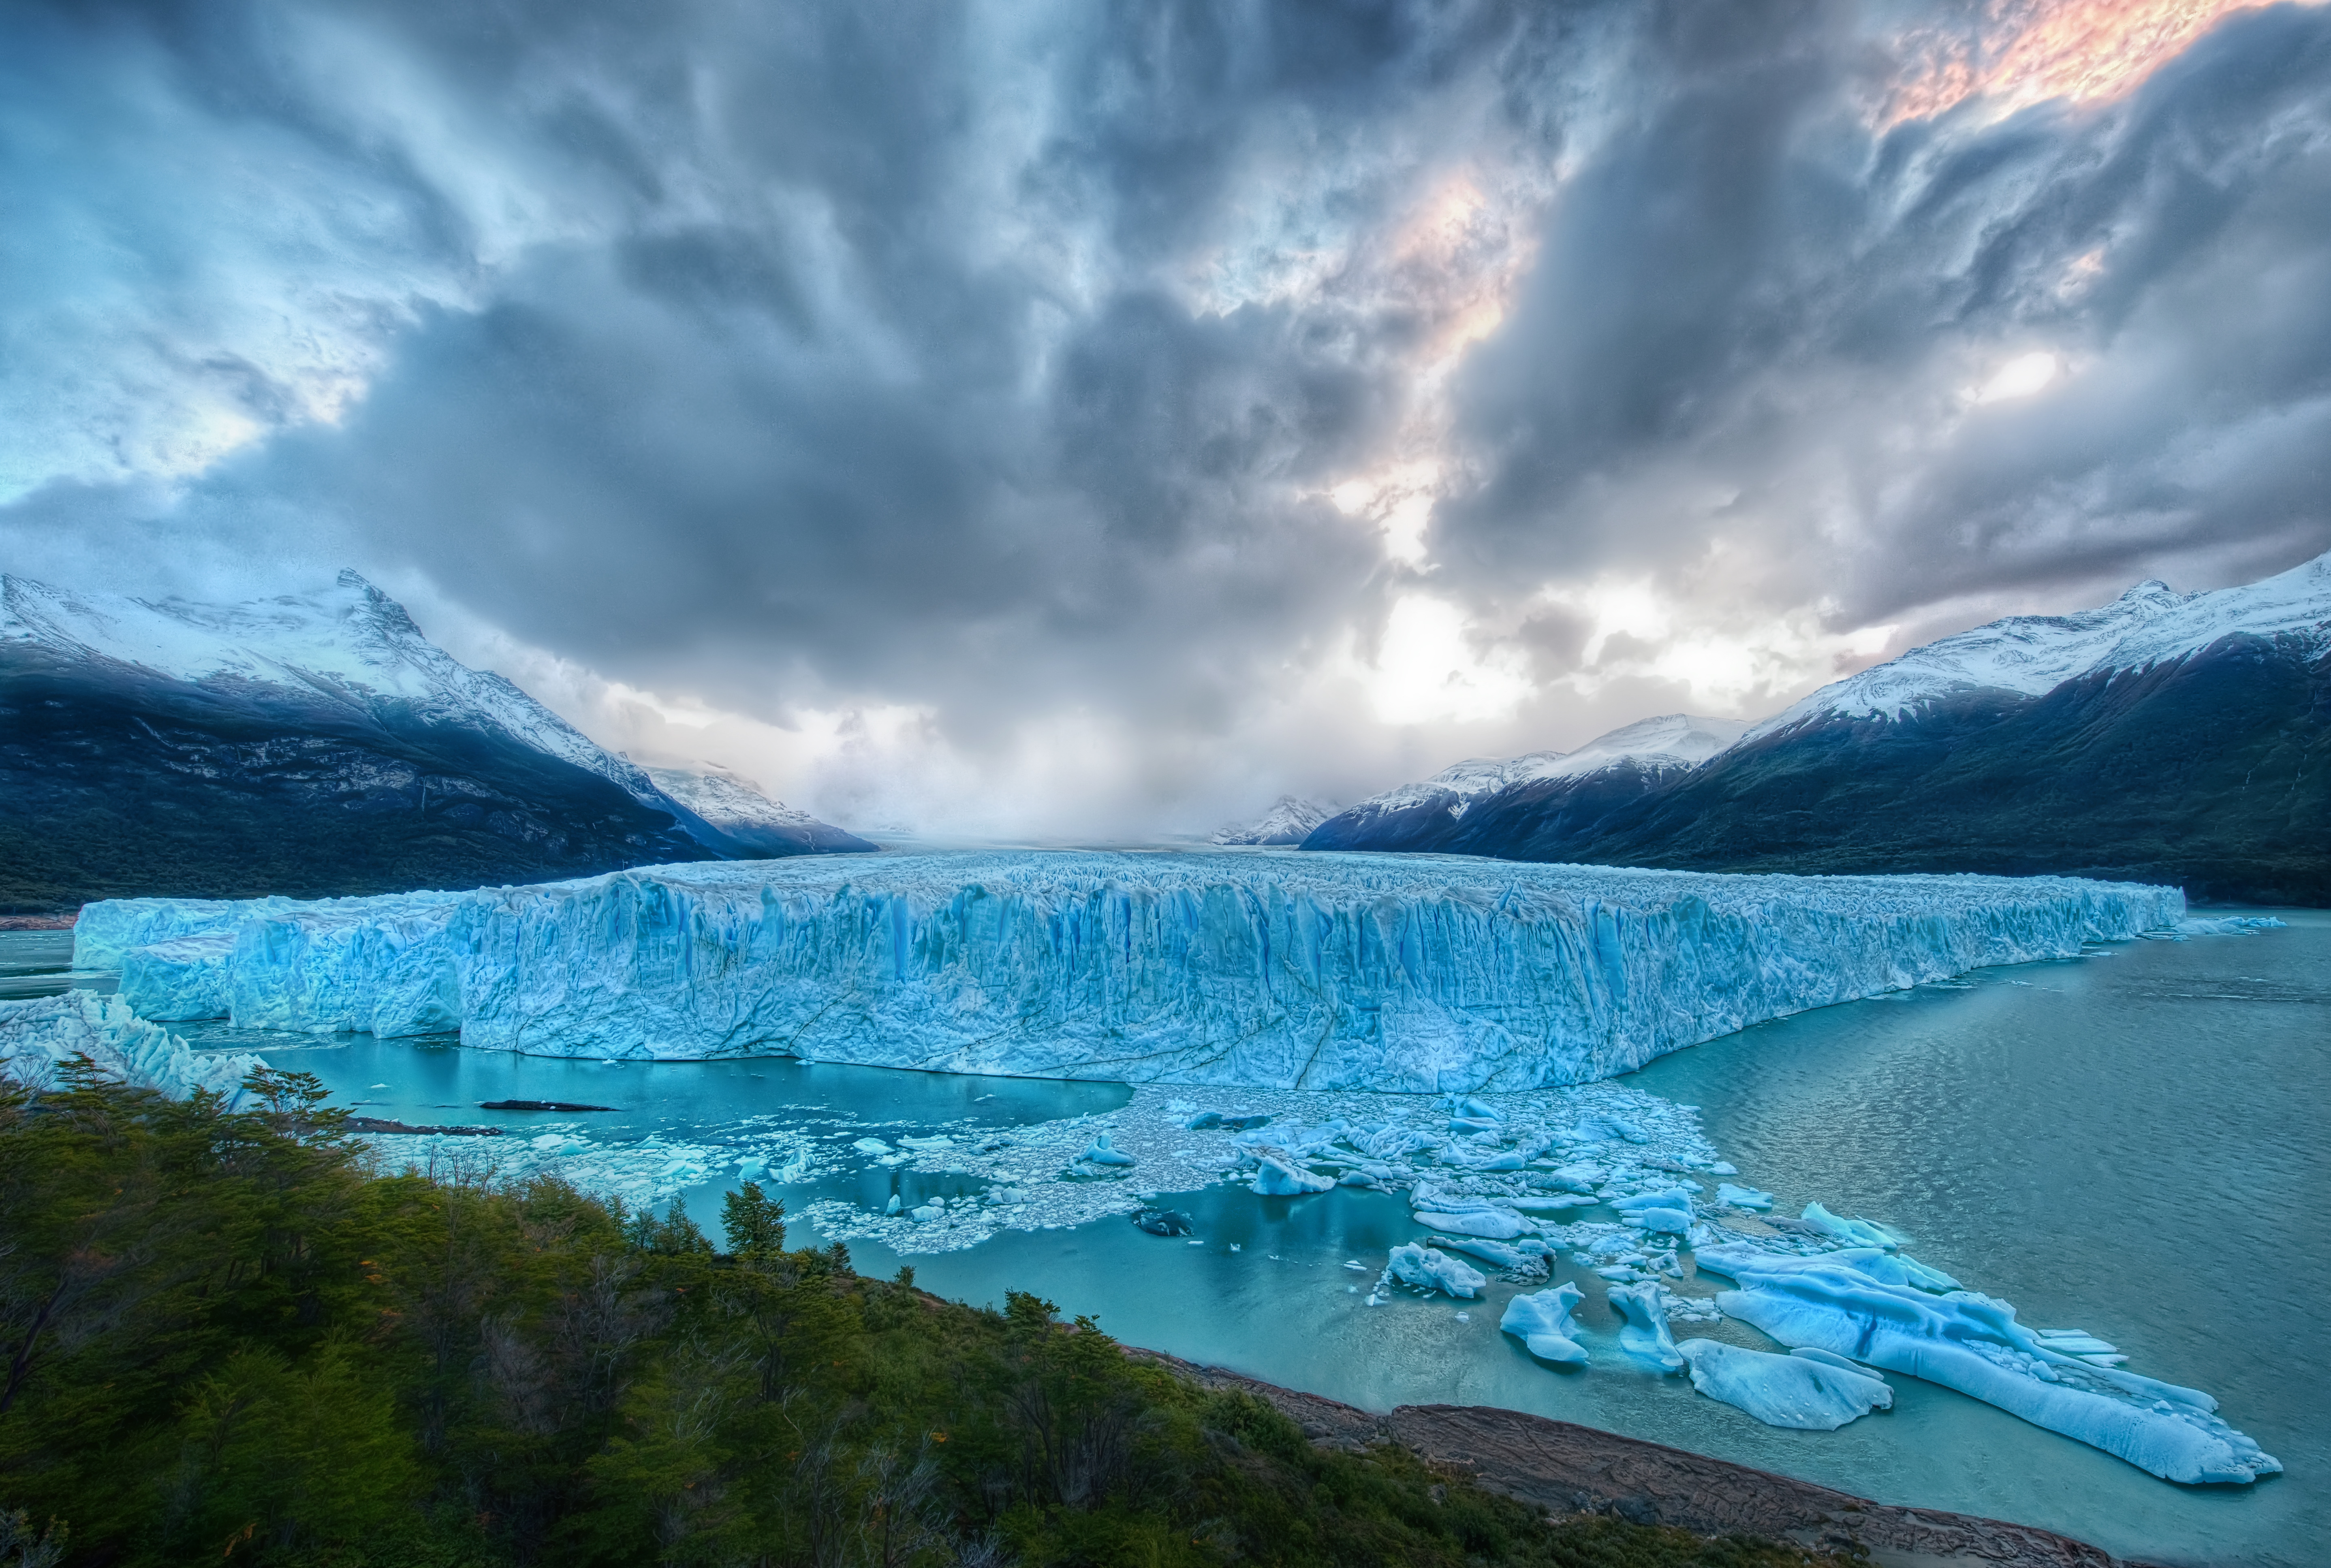 Обои на телефон самые красивые в мире. Ледник Перито-Морено Аргентина. Ледник Перито-Морено лёд. Ледник Ламберта Антарктида. Ледник Геблера.